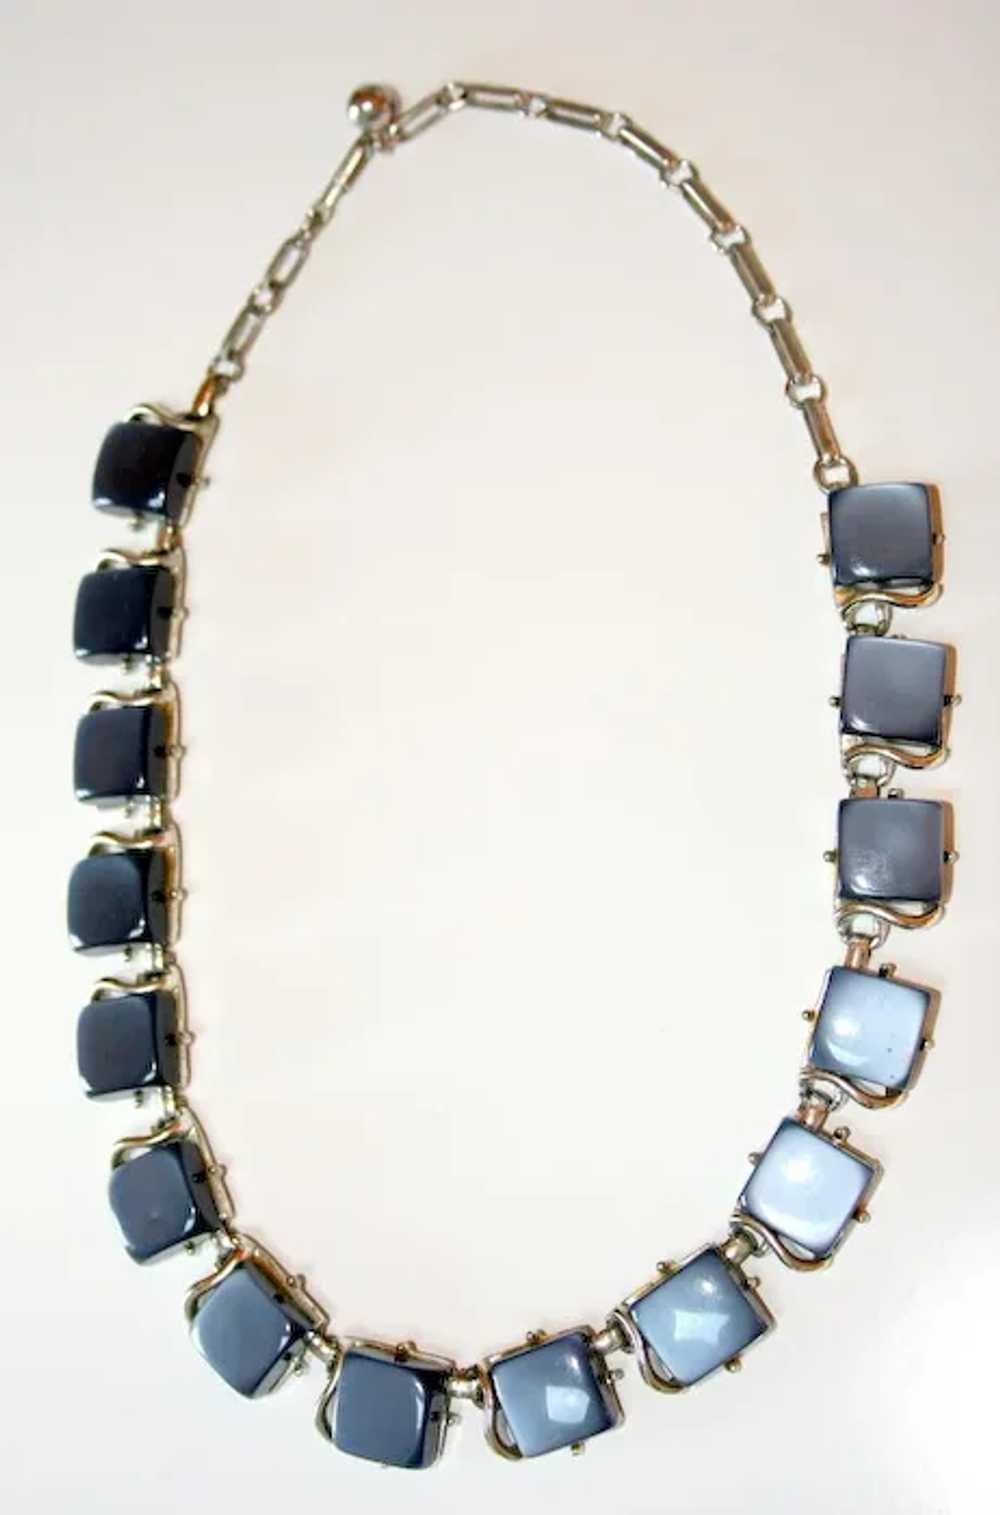 Vintage Coro Necklace in Blue - image 1